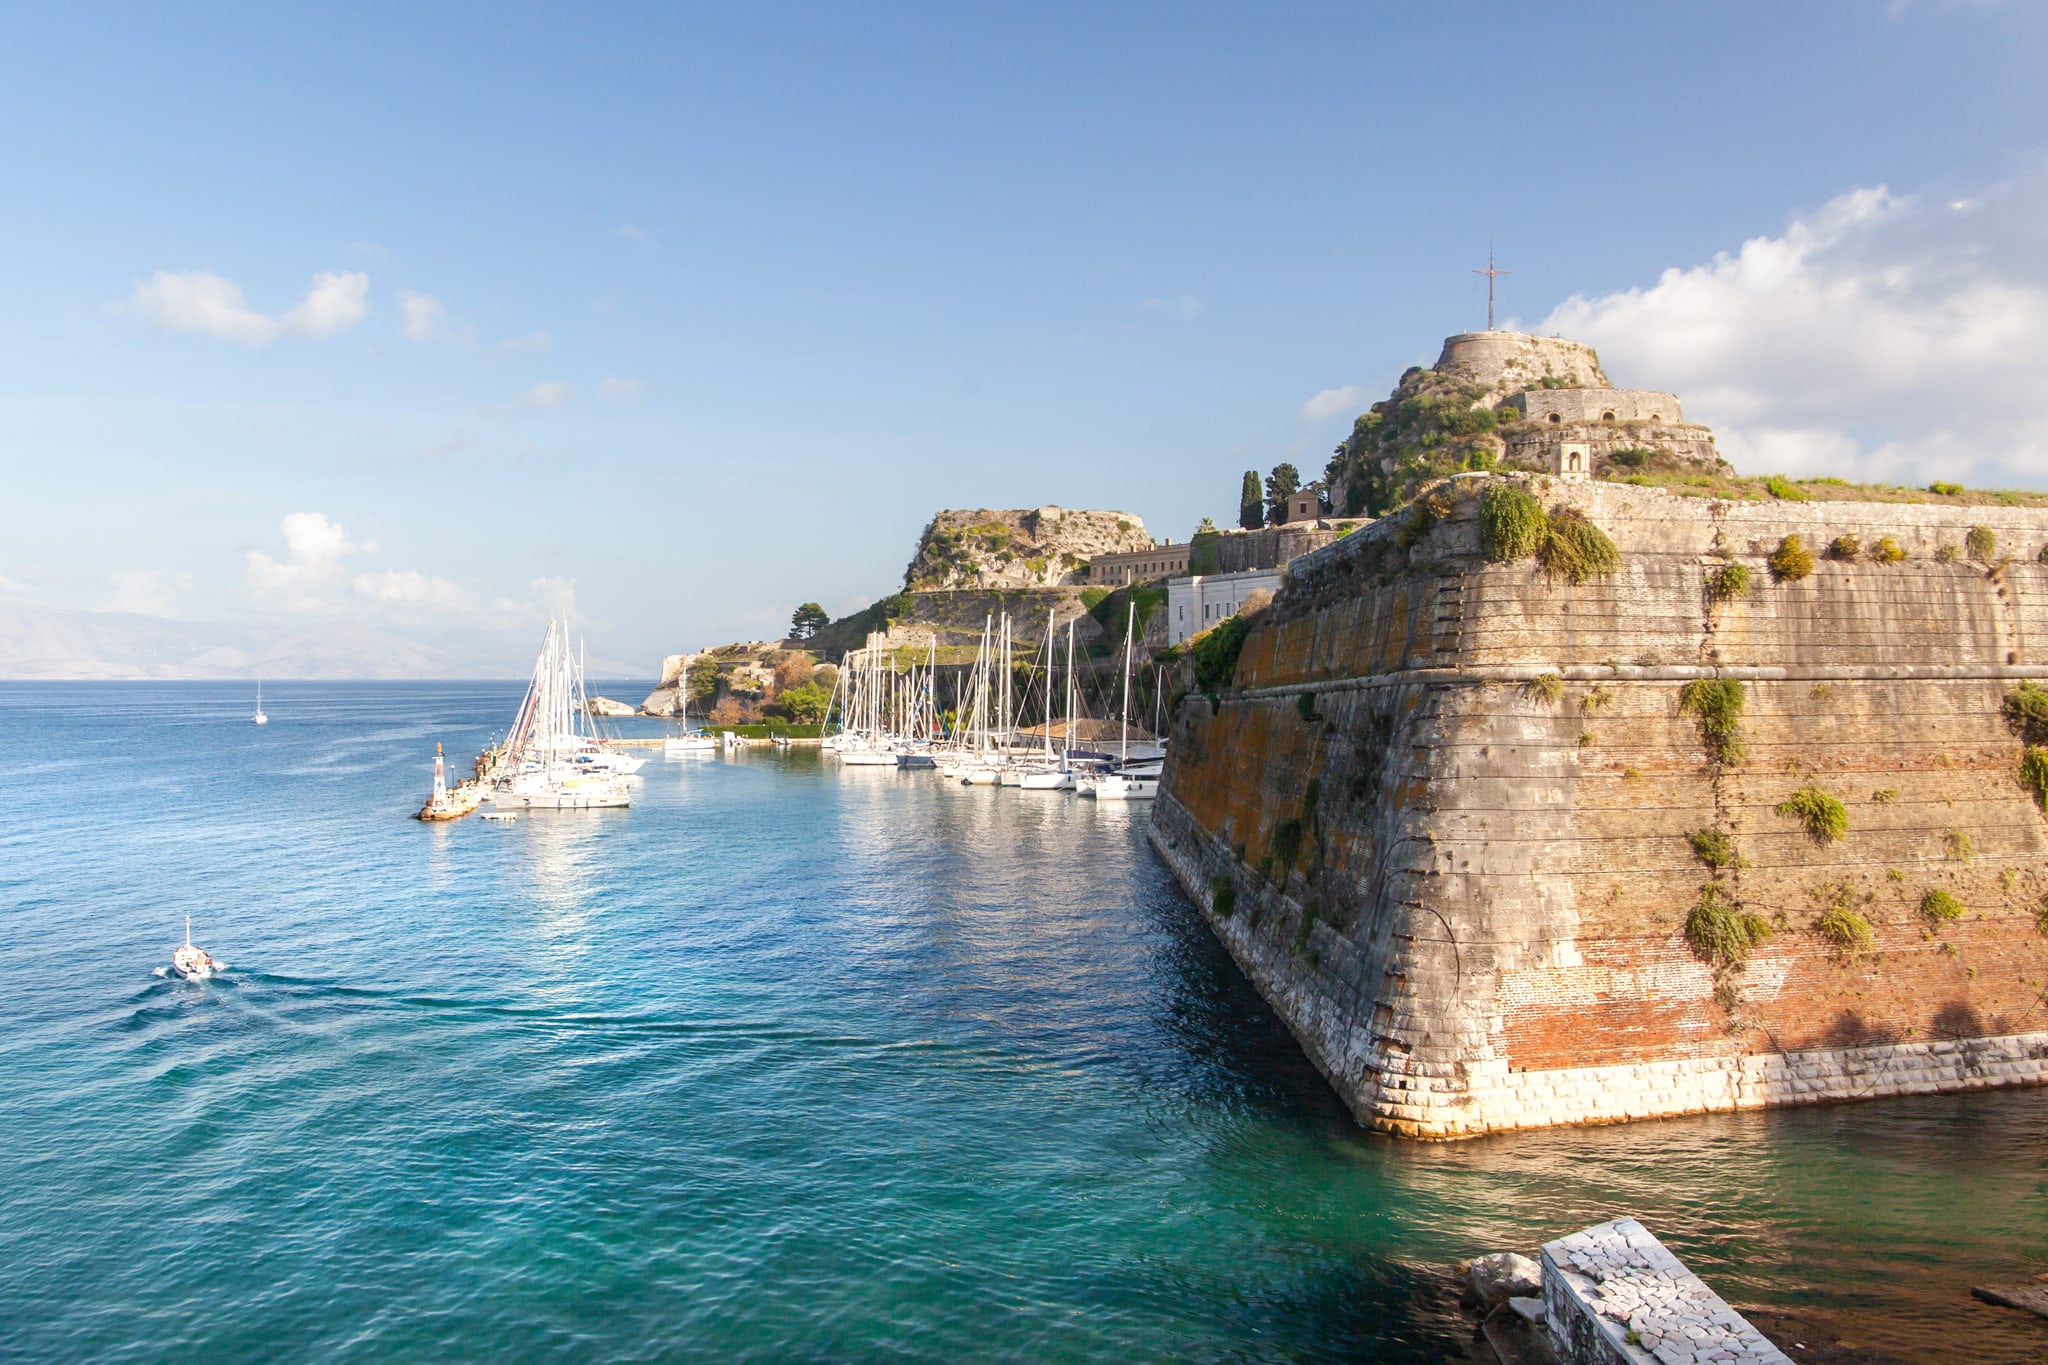 Corfu's Venetian Fortress is a jewel in the island's culture capital